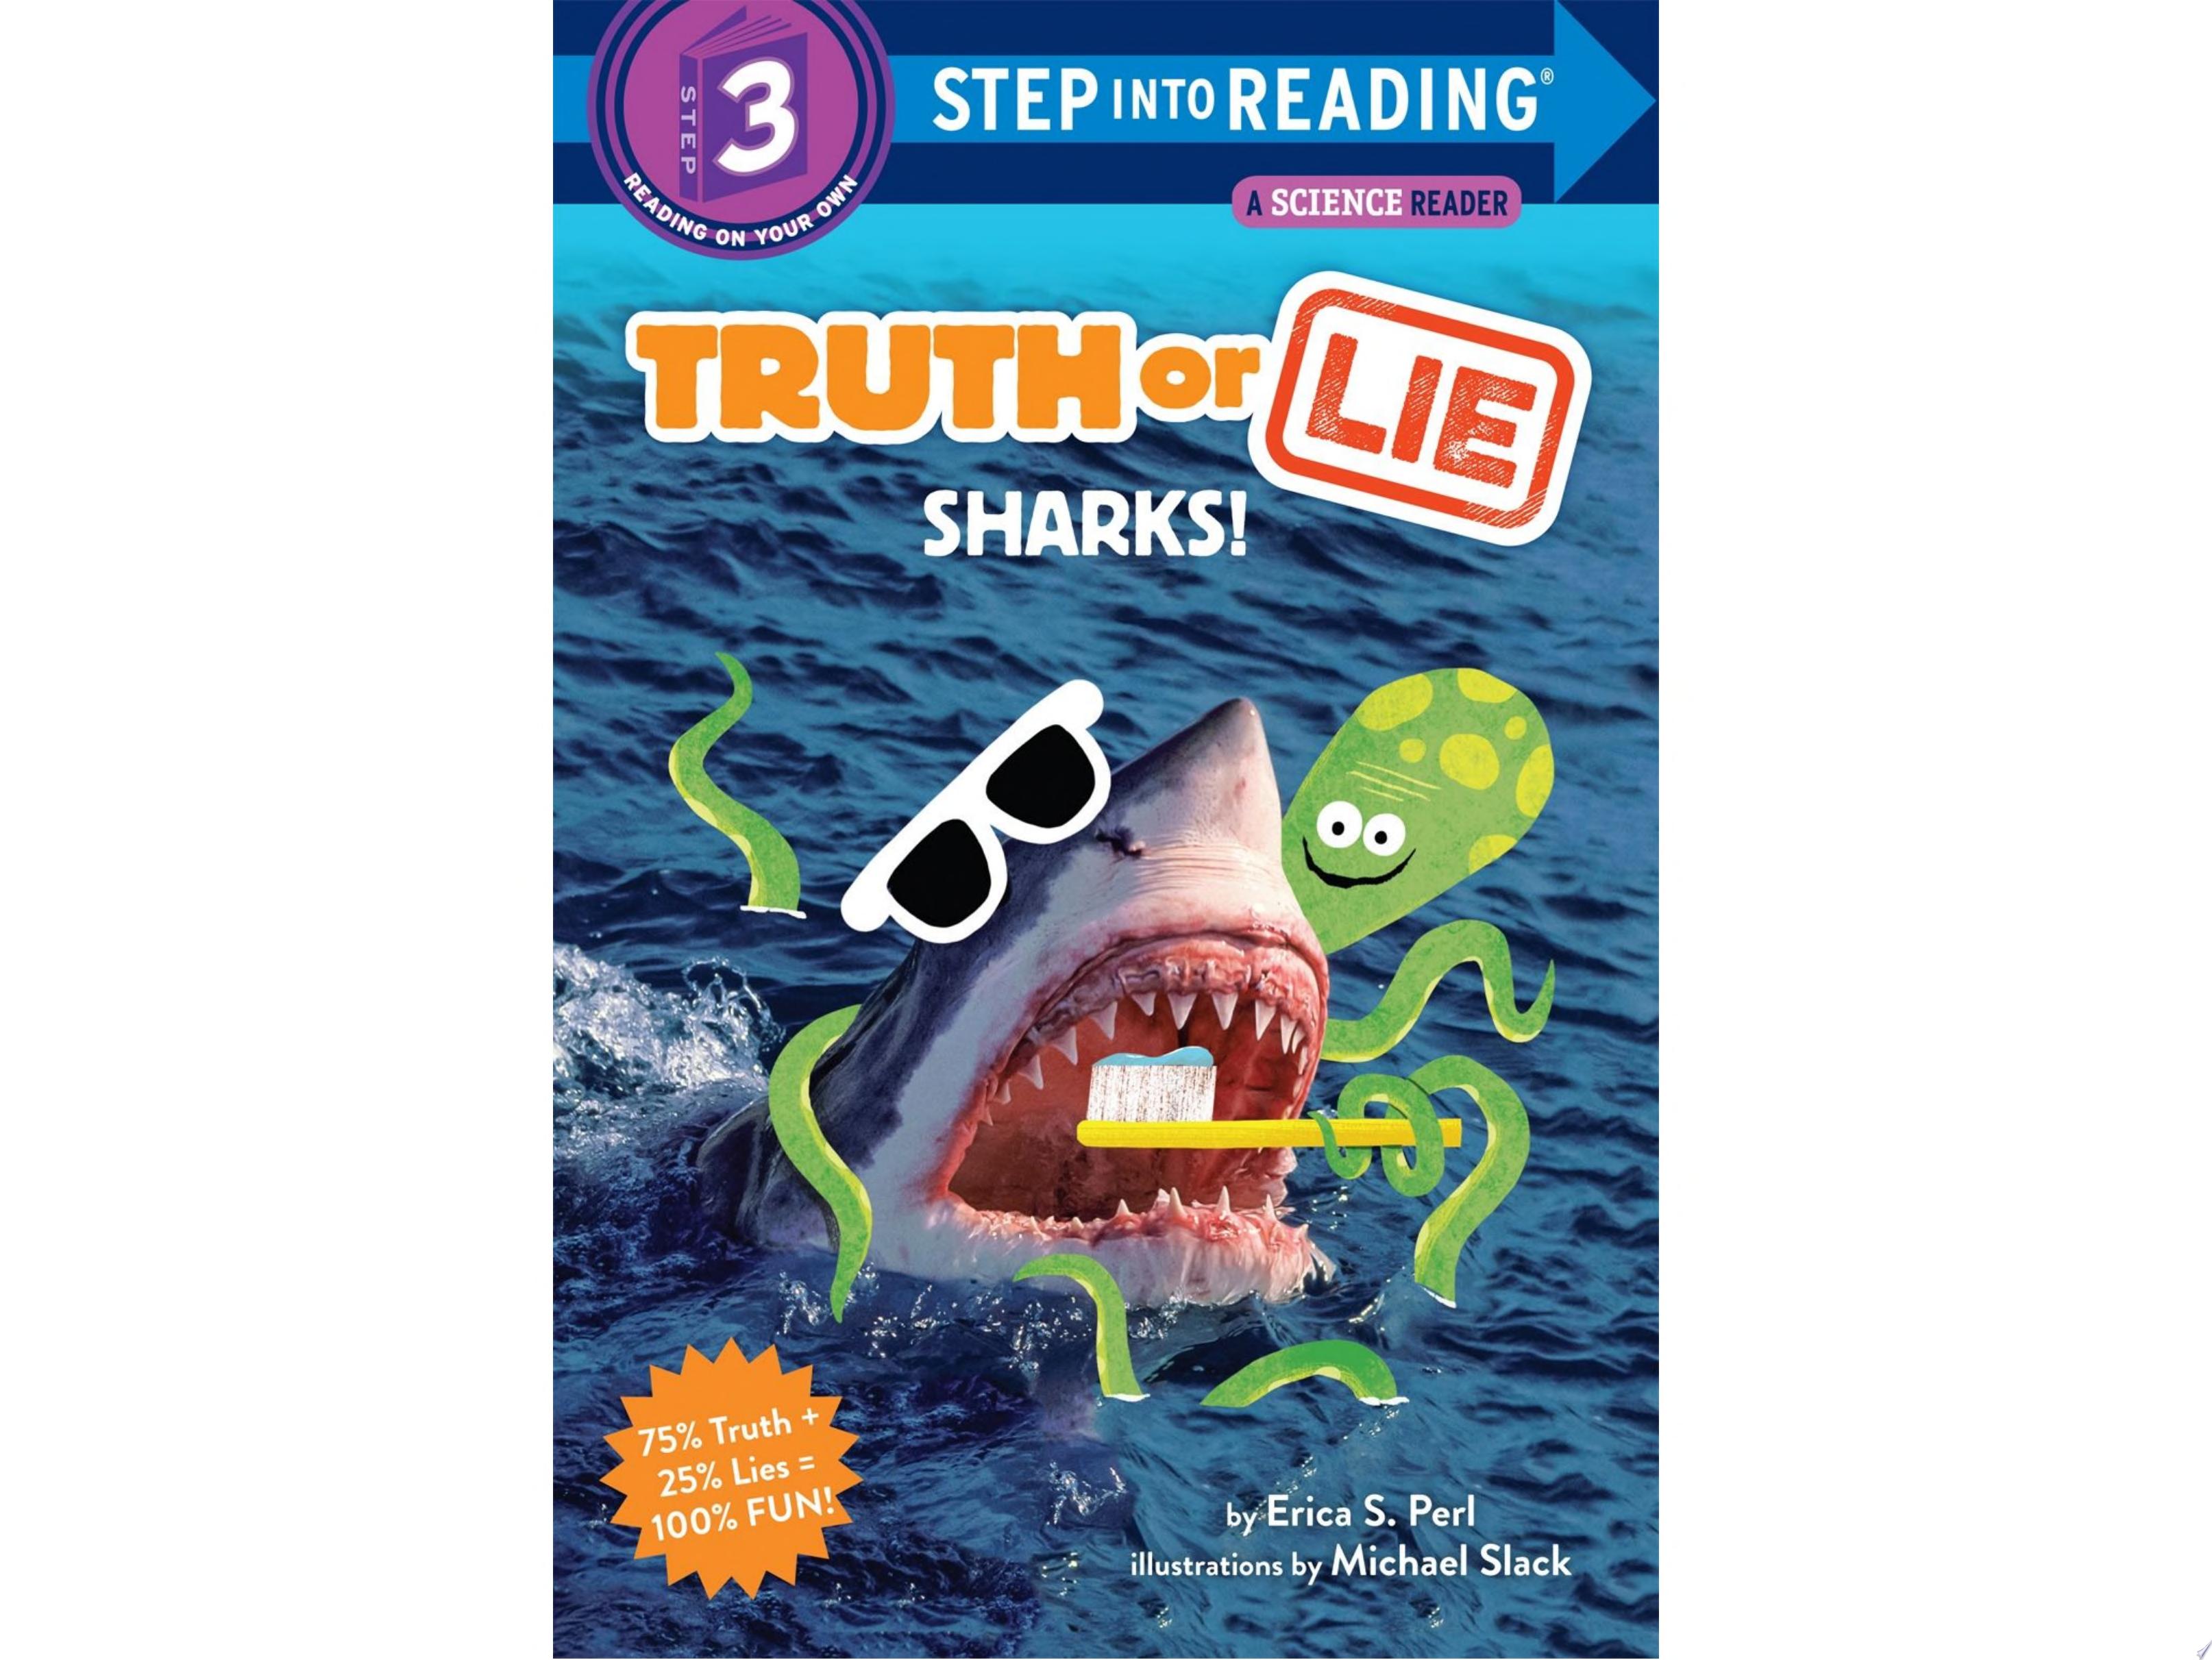 Image for "Truth or Lie: Sharks!"